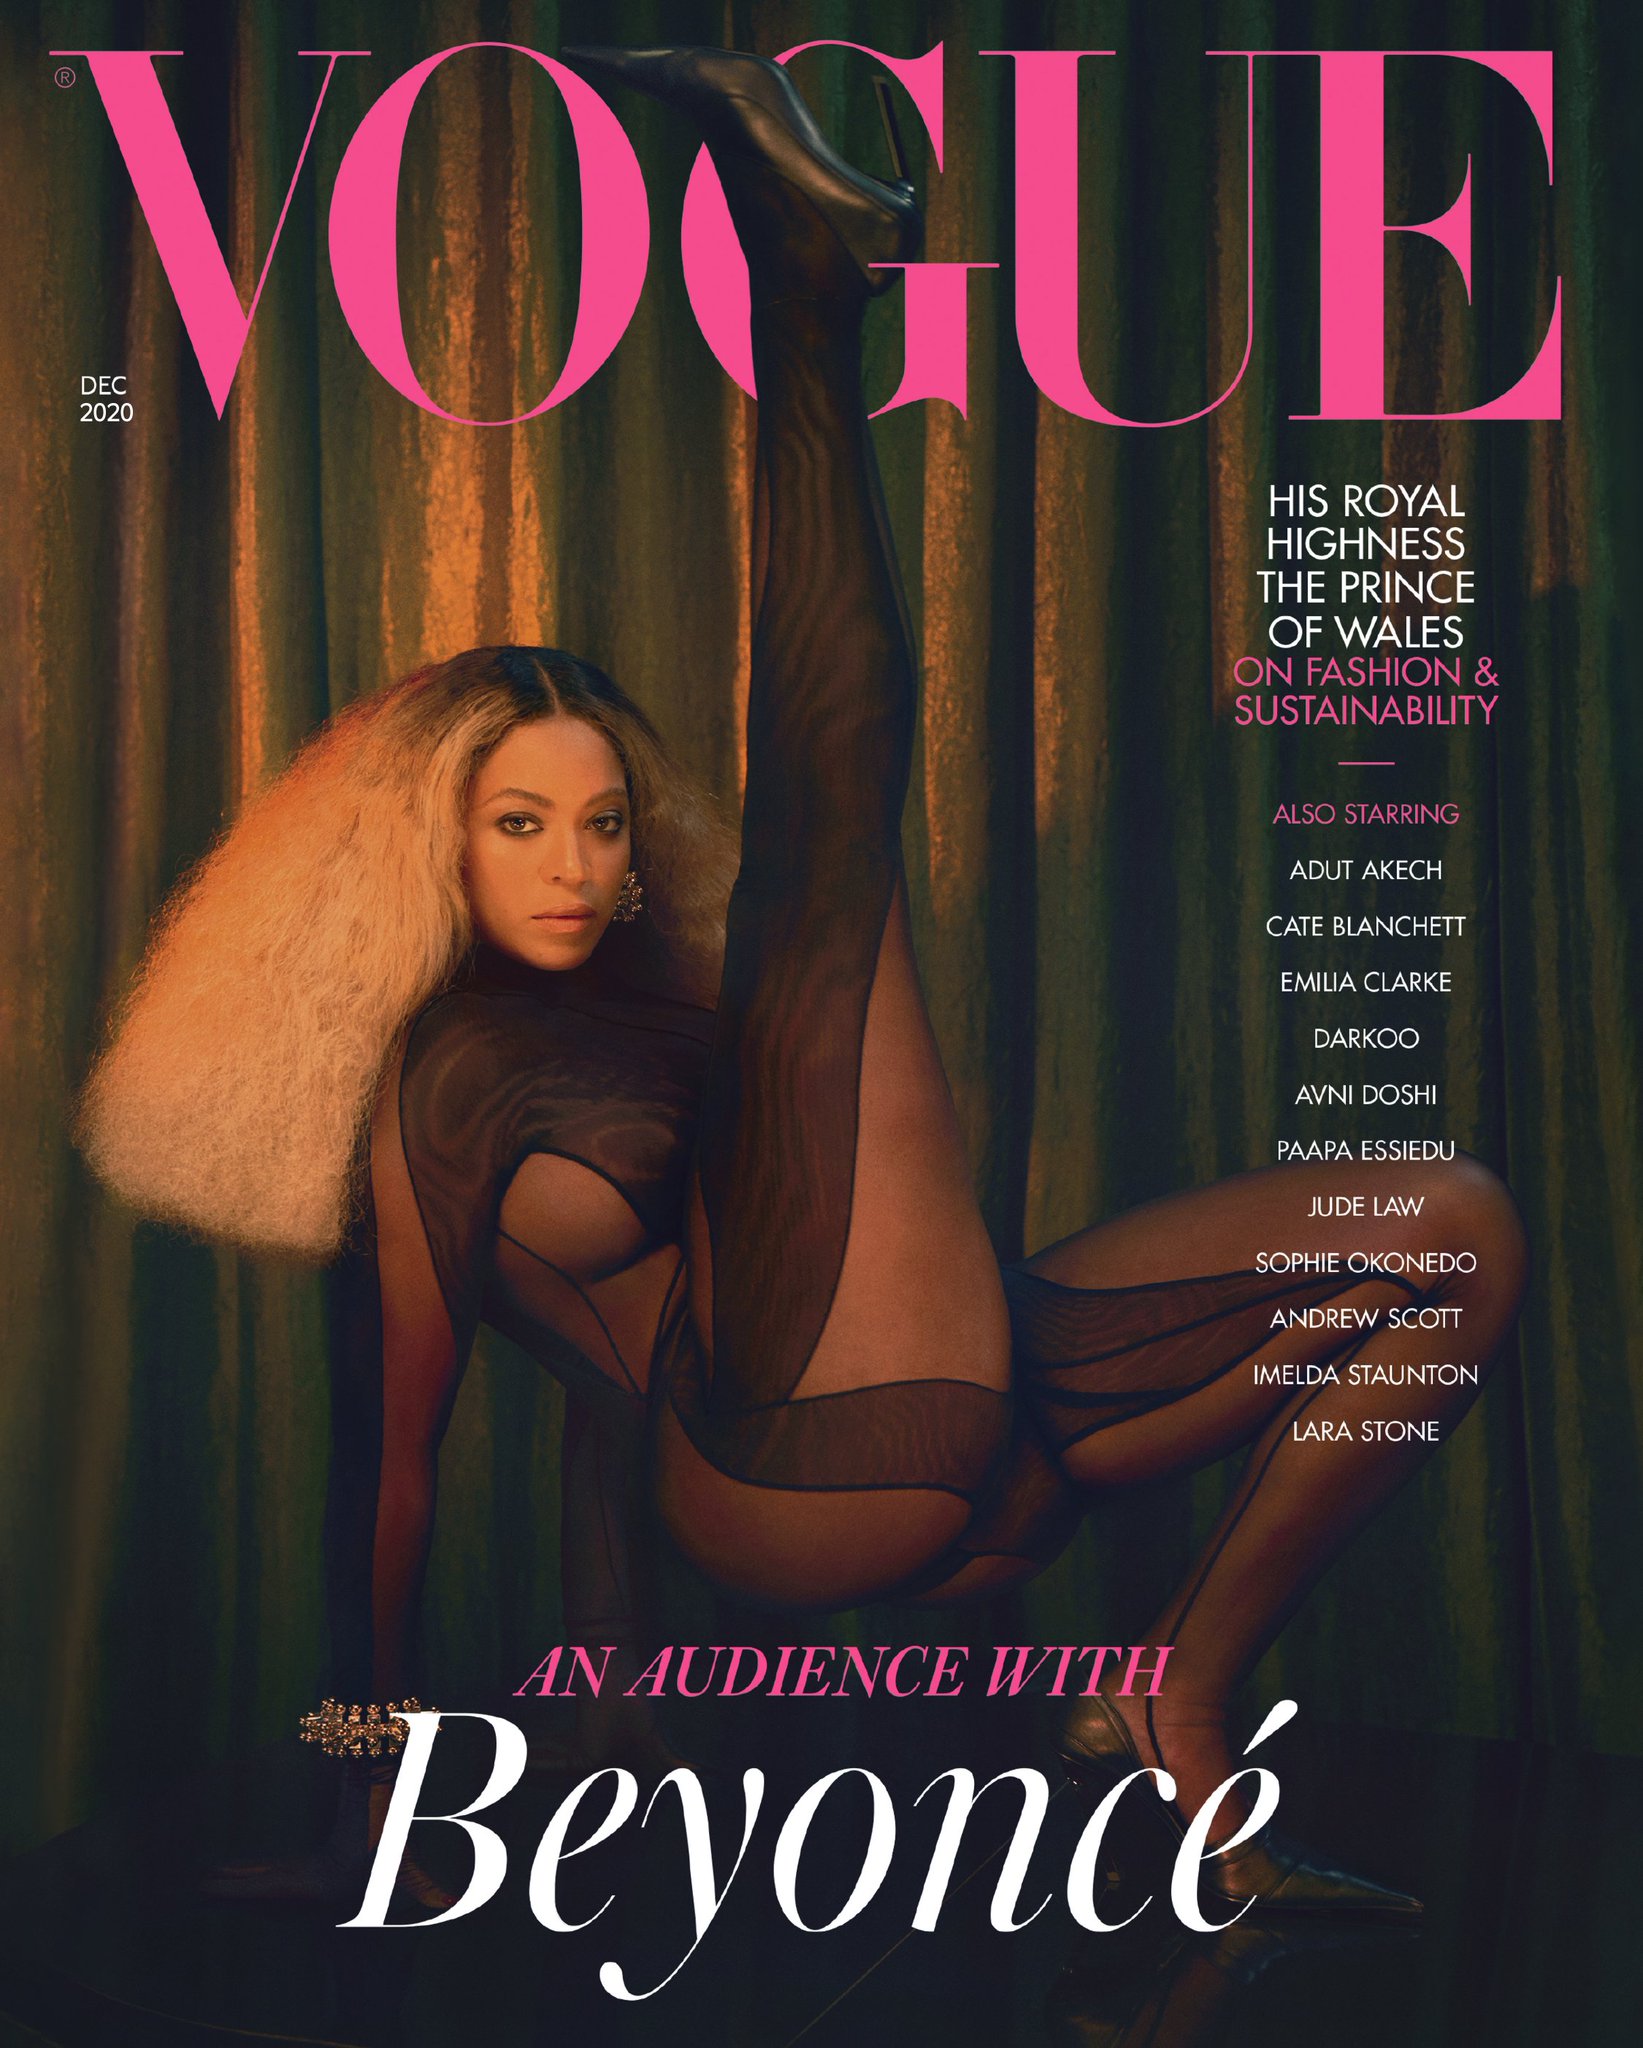 Beyoncé Wearing Mugler Covers British Vogue’s December 2020 Issue